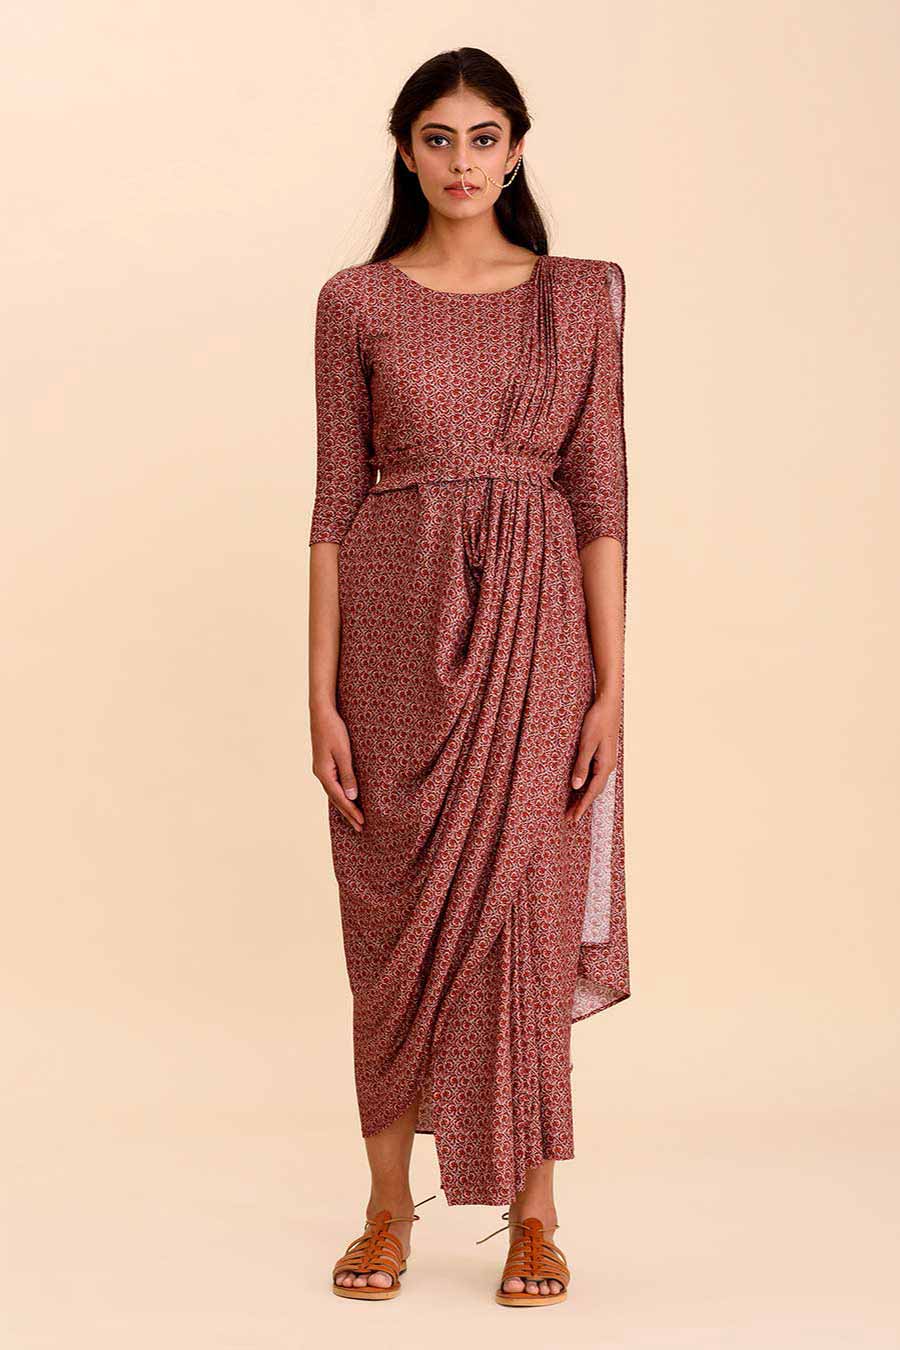 DHRUVA - Pre Draped Printed Saree Dress